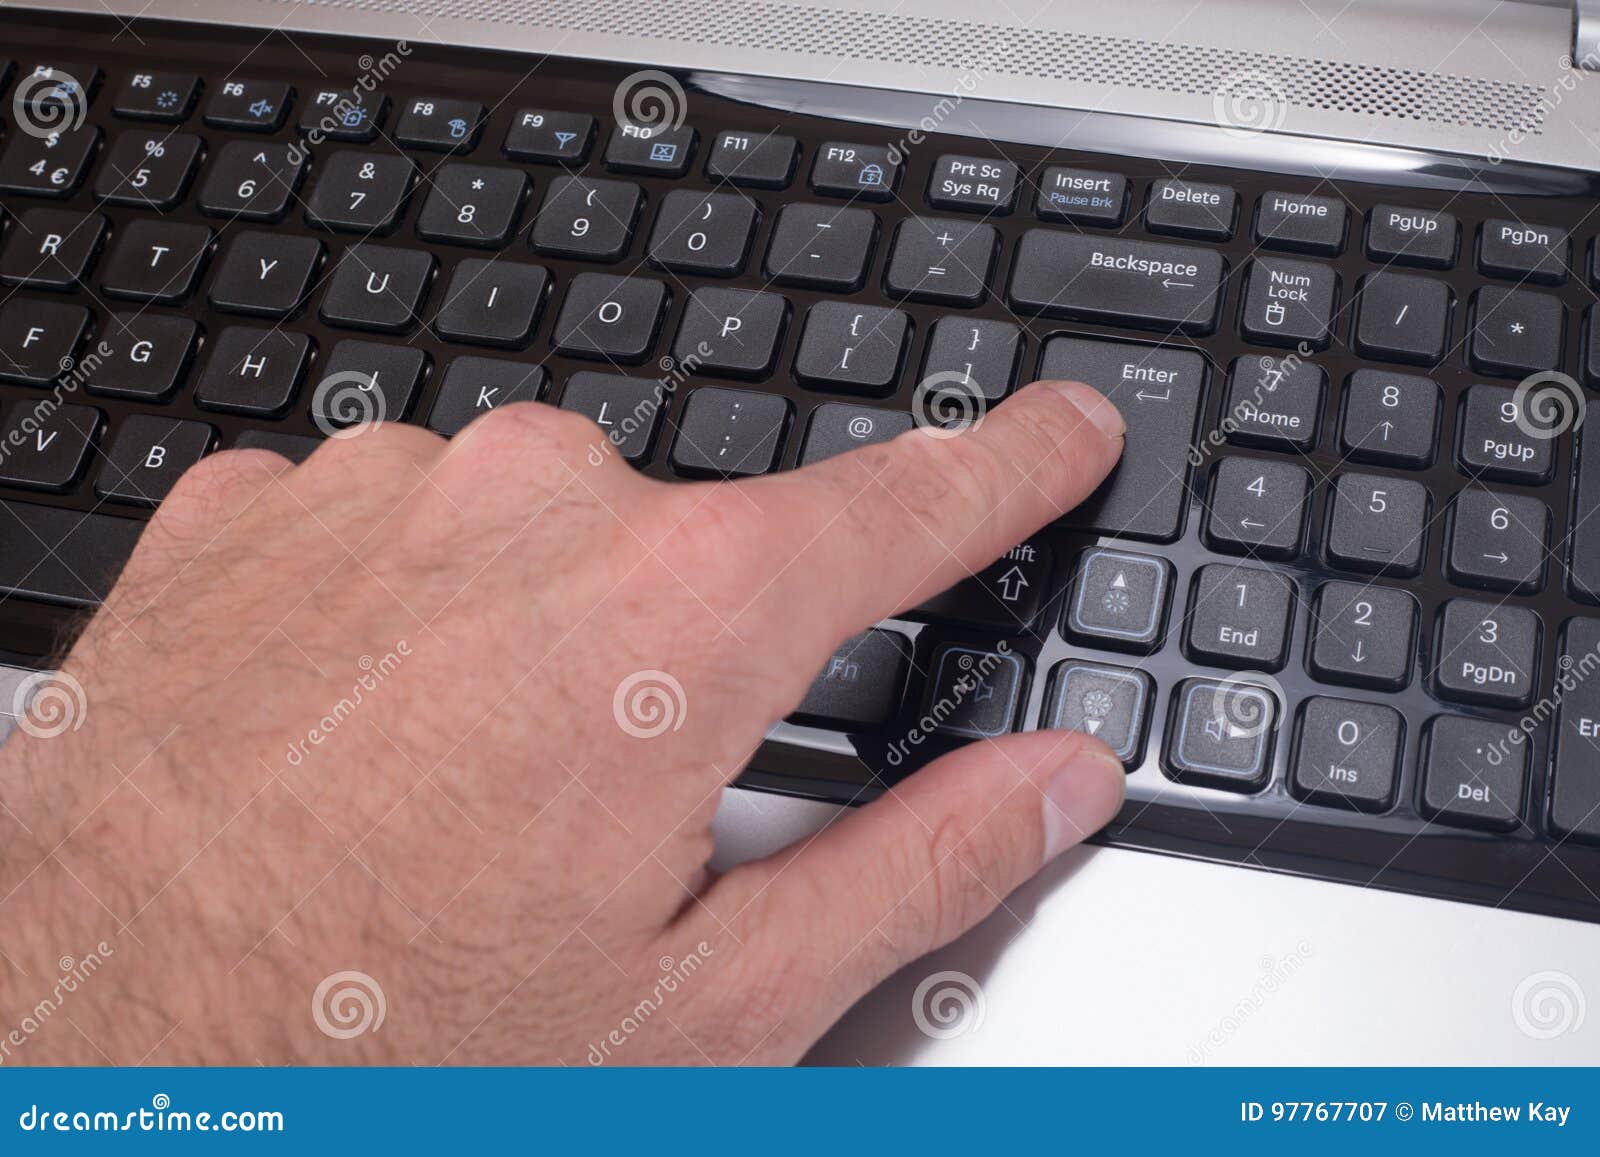 Поставь enter. Ввод на клавиатуре. Кнопка ввод на клавиатуре. Ввод на клавиатуре ноутбука. Нажатие на клавиатуру.